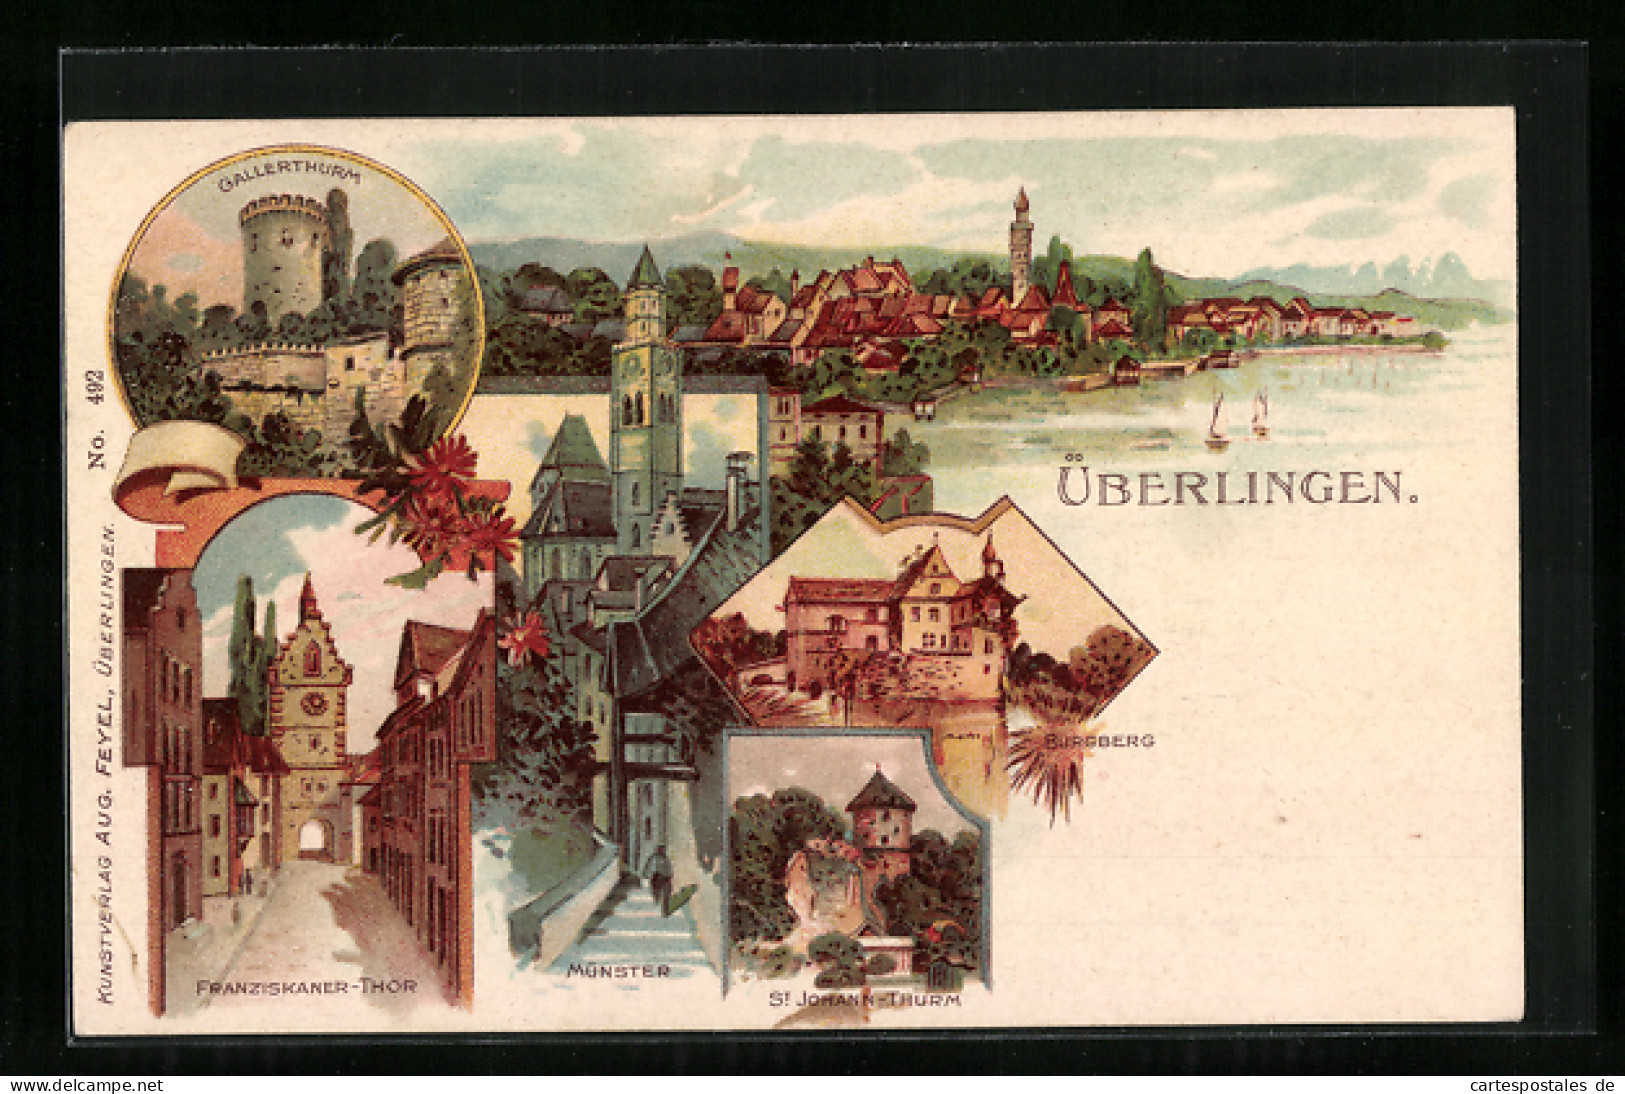 Lithographie Überlingen, Franziskaner-Thor, Münster, St. Johann-Thurm  - Ueberlingen